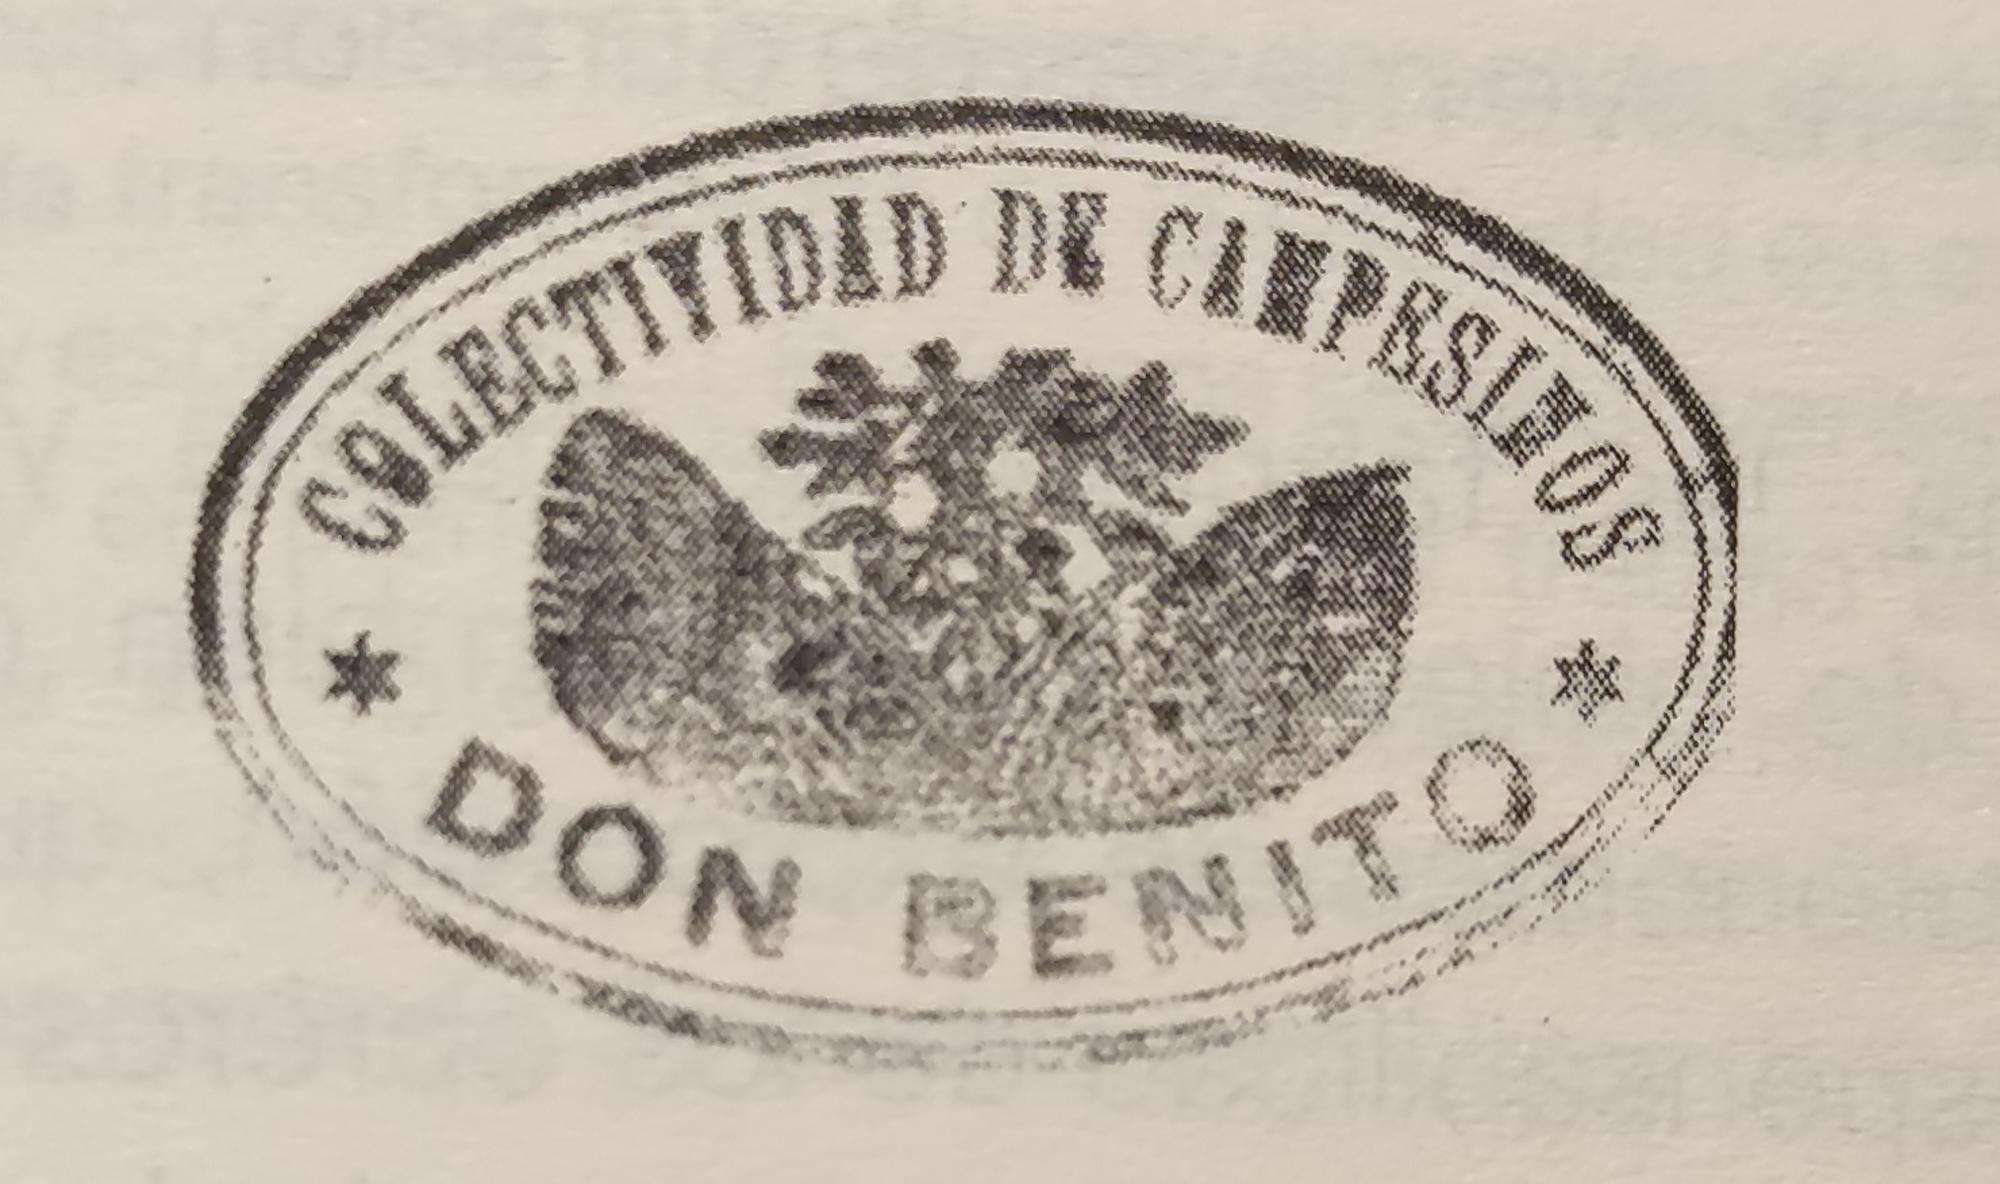 Sello Colectividad de Campesinos de Don Benito Extremadura